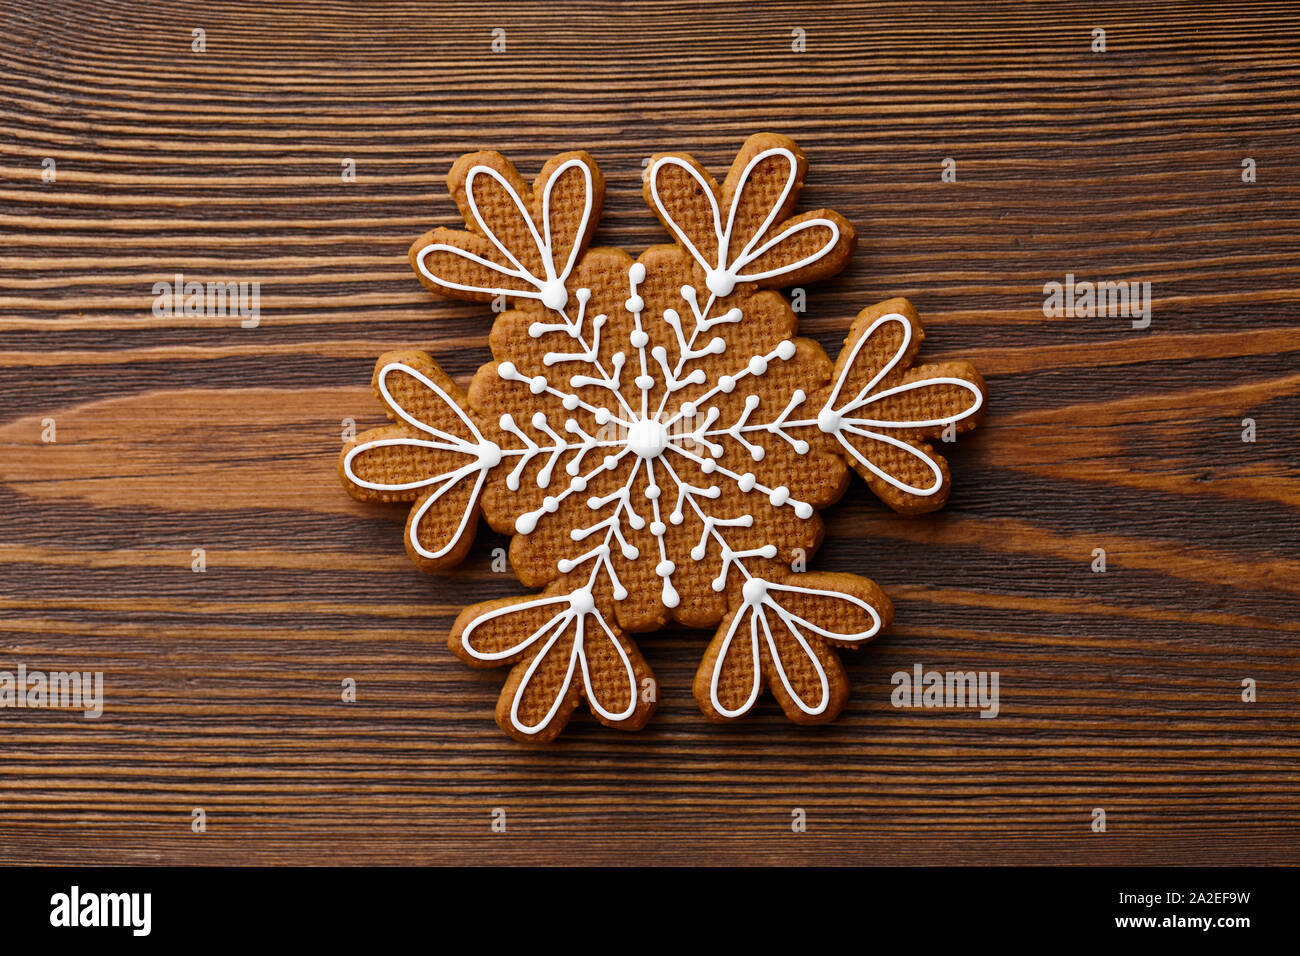 Pan de jengibre de Navidad copo de nieve de textura de madera Foto de stock